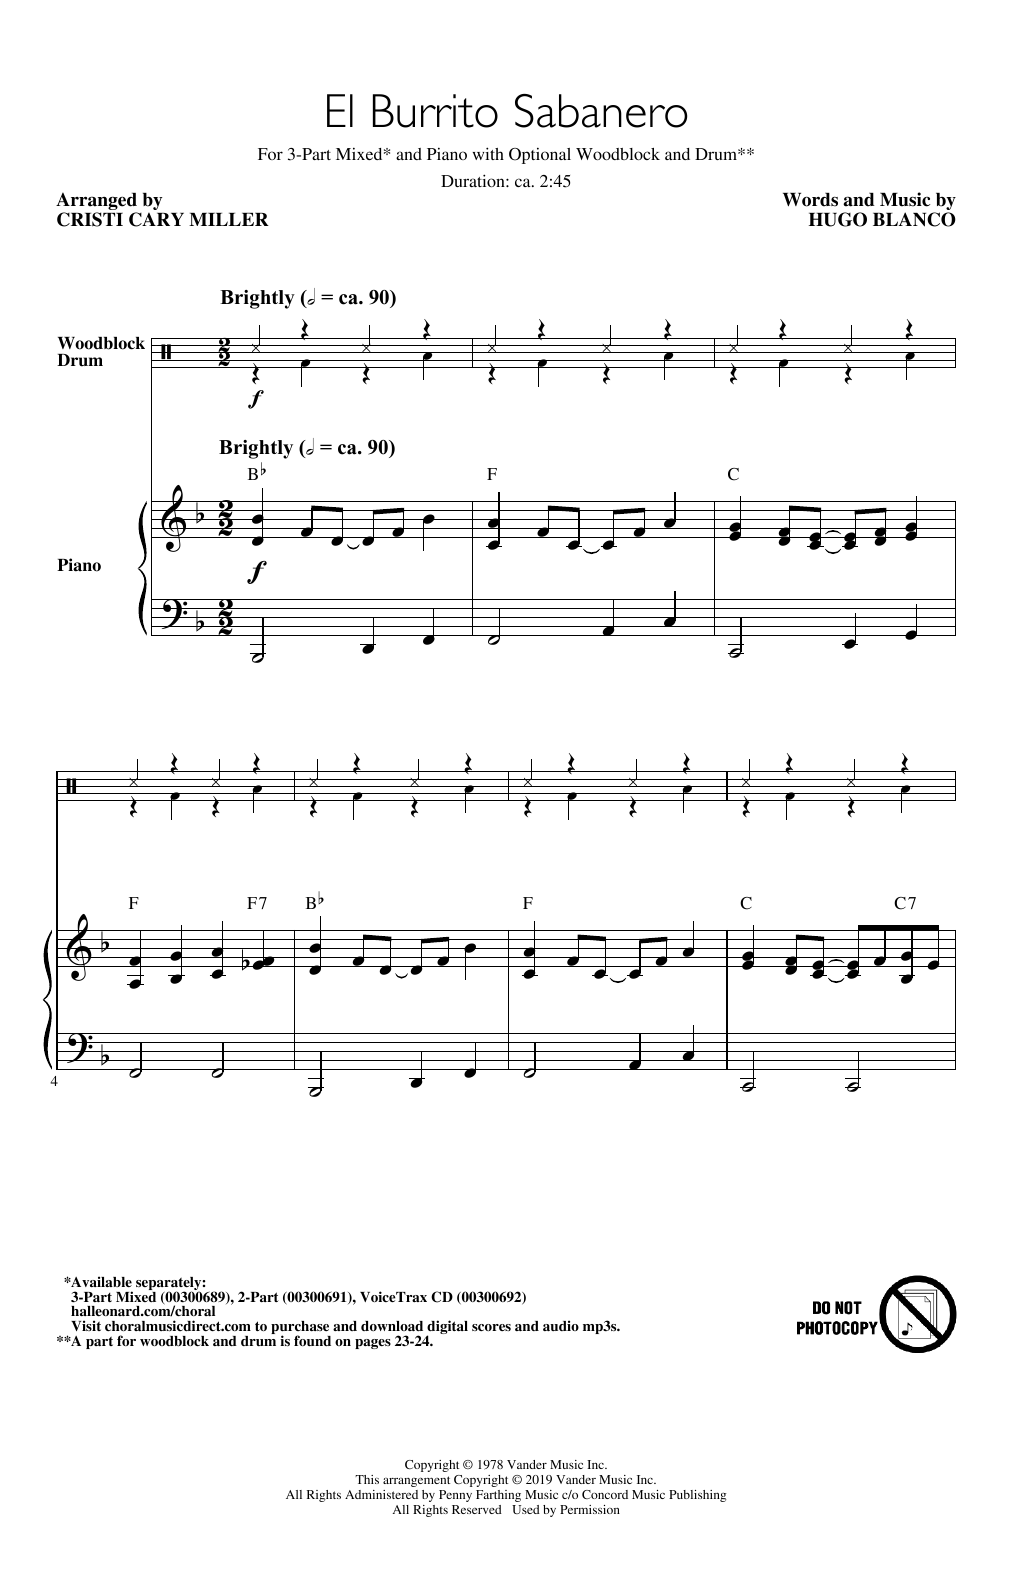 Hugo Blanco El Burrito Sabanero (Mi Burrito Sabanero) (arr. Cristi Cary Miller) Sheet Music Notes & Chords for 2-Part Choir - Download or Print PDF